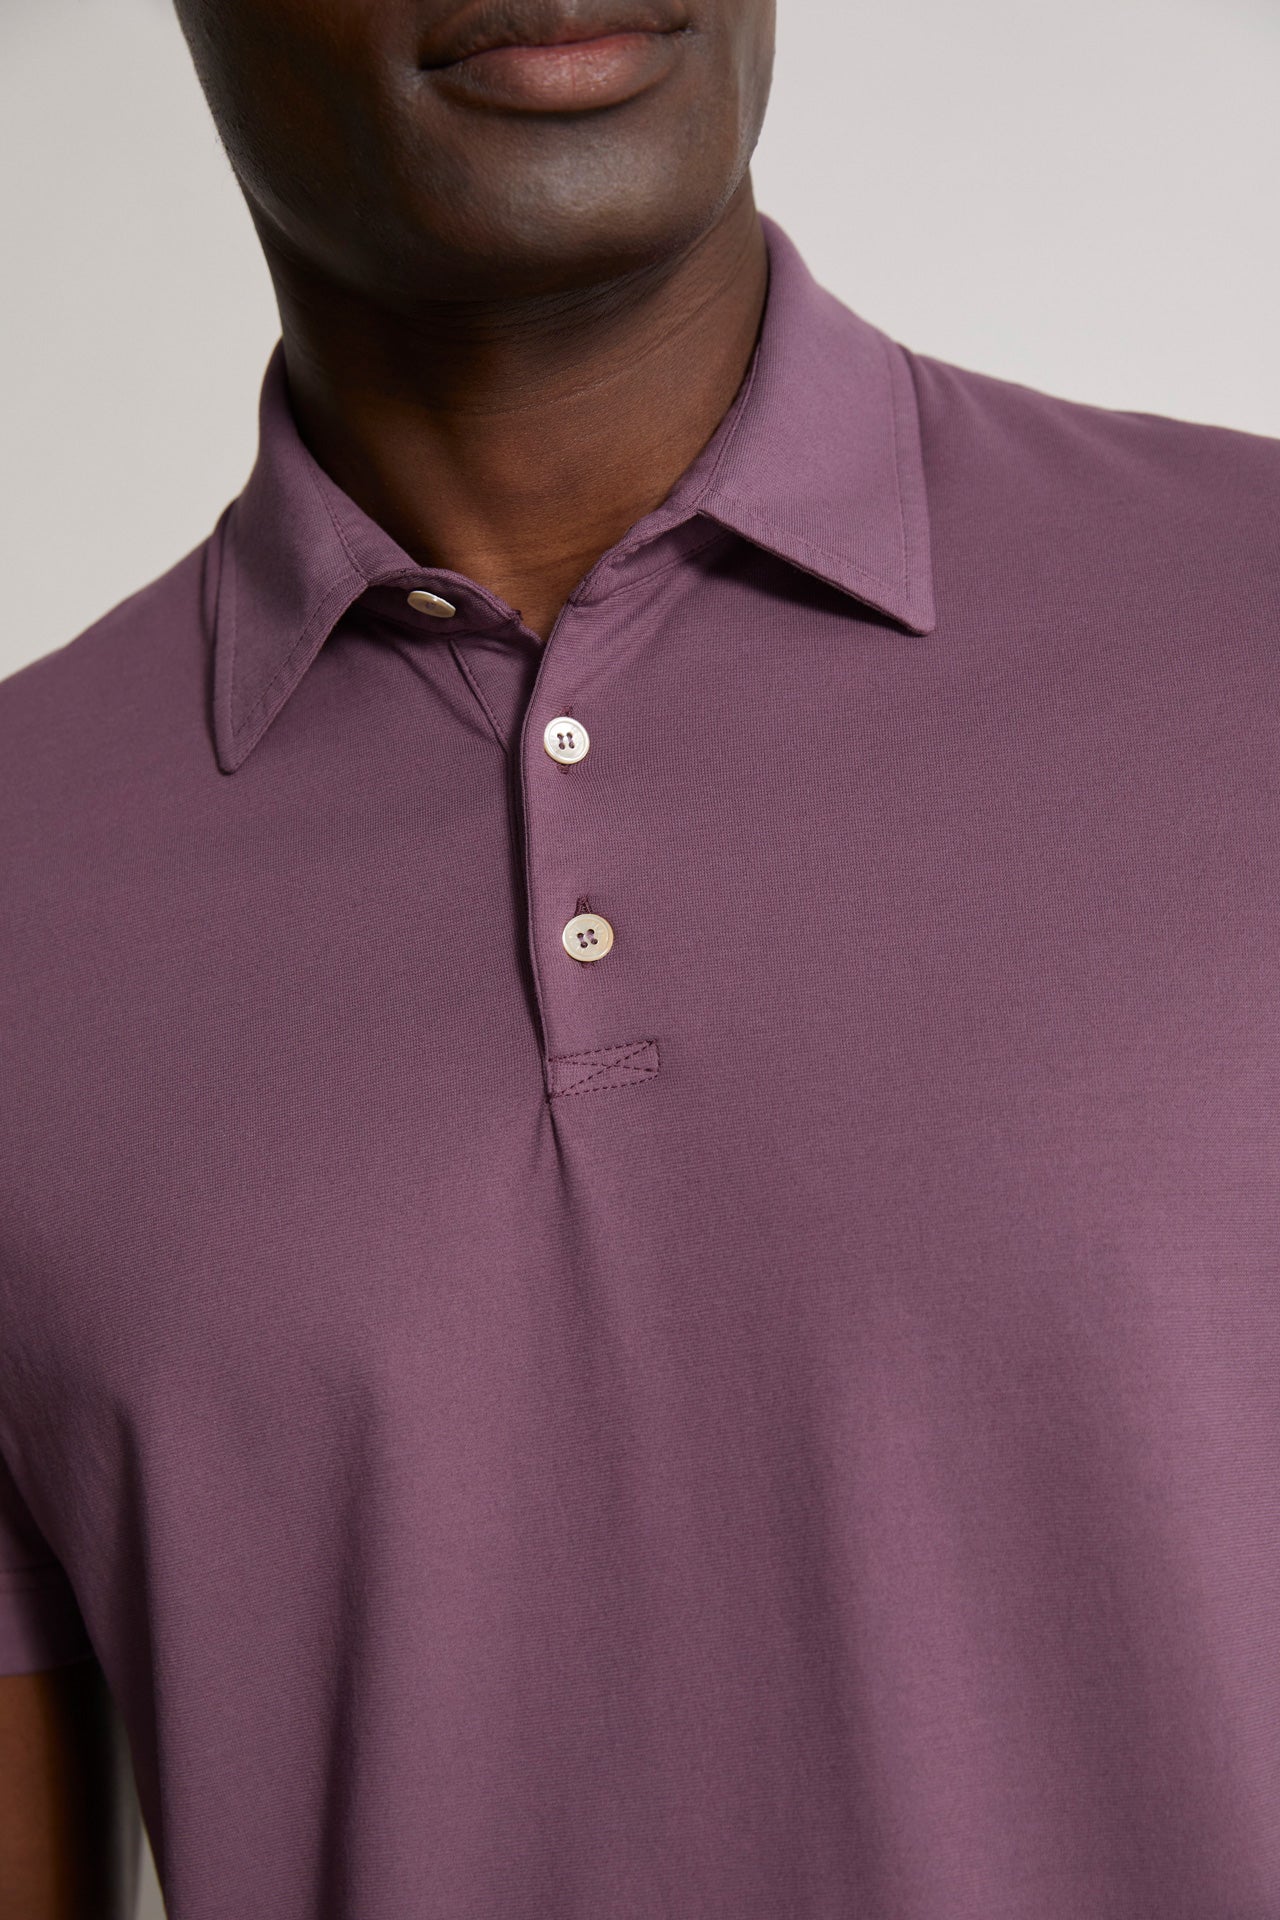 men's iconic cotton polo jersey in violet indigo - neck detail 